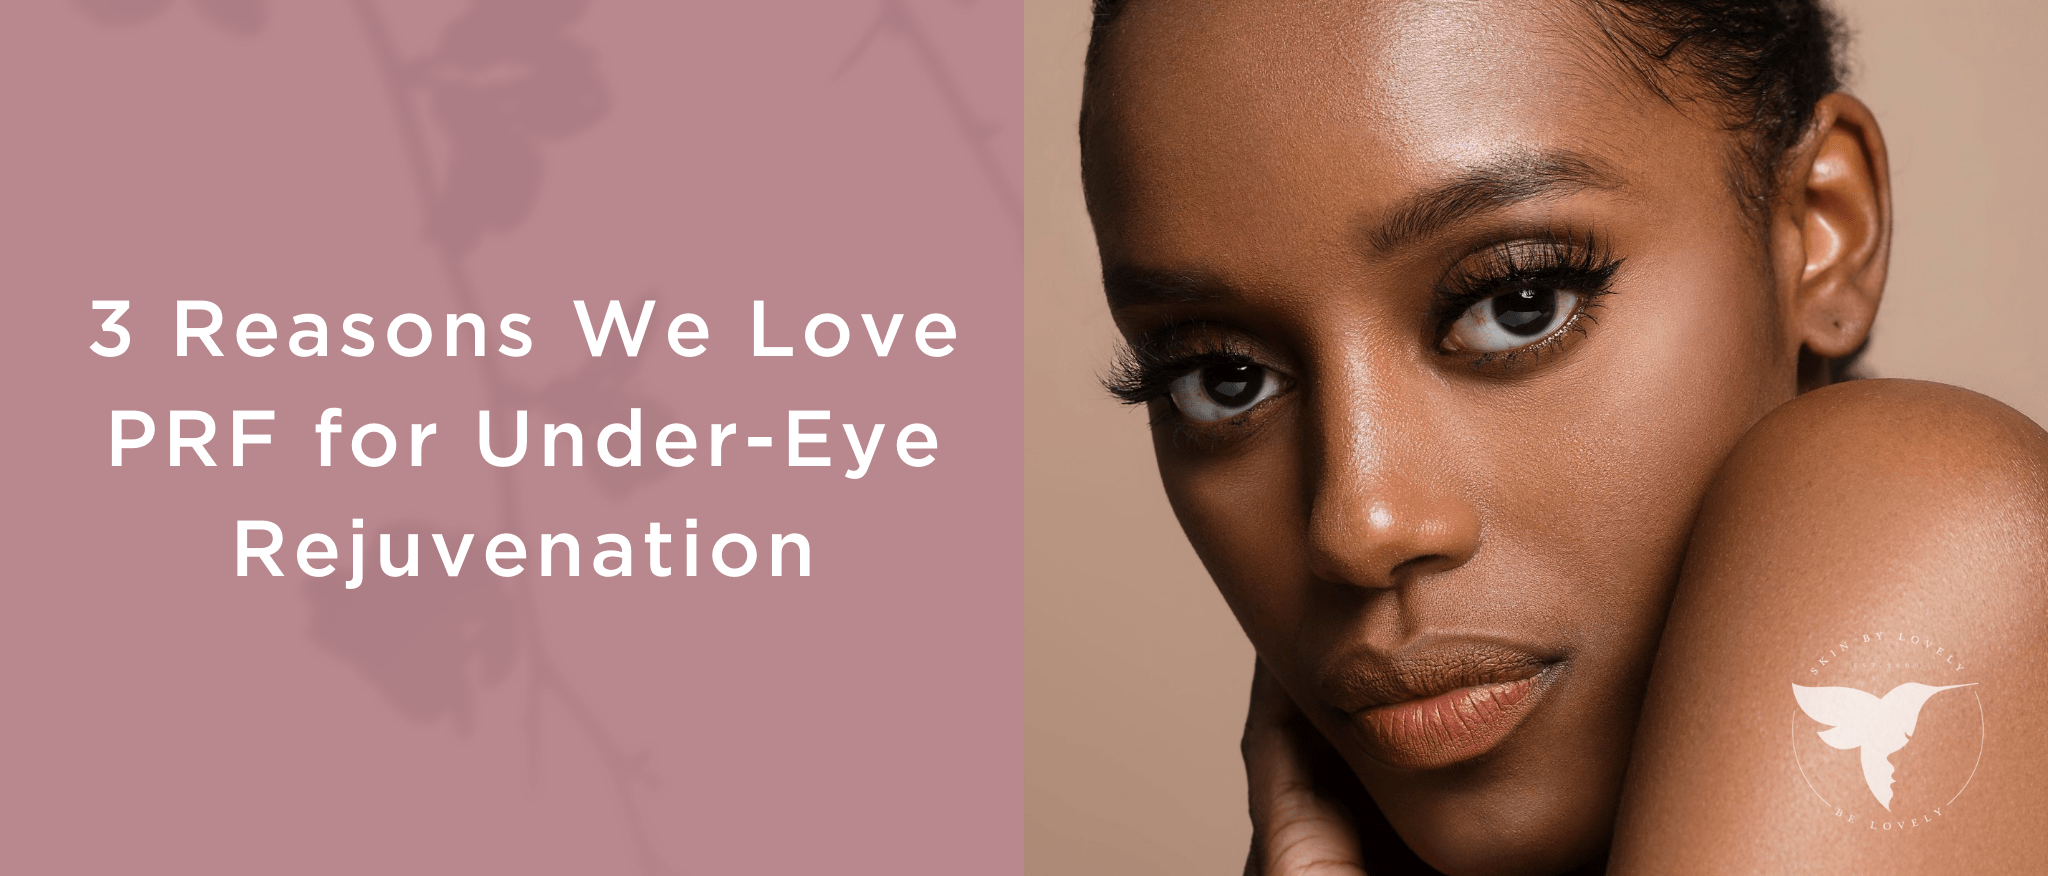 3 Reasons We Love PRF for Under-Eye Rejuvenation